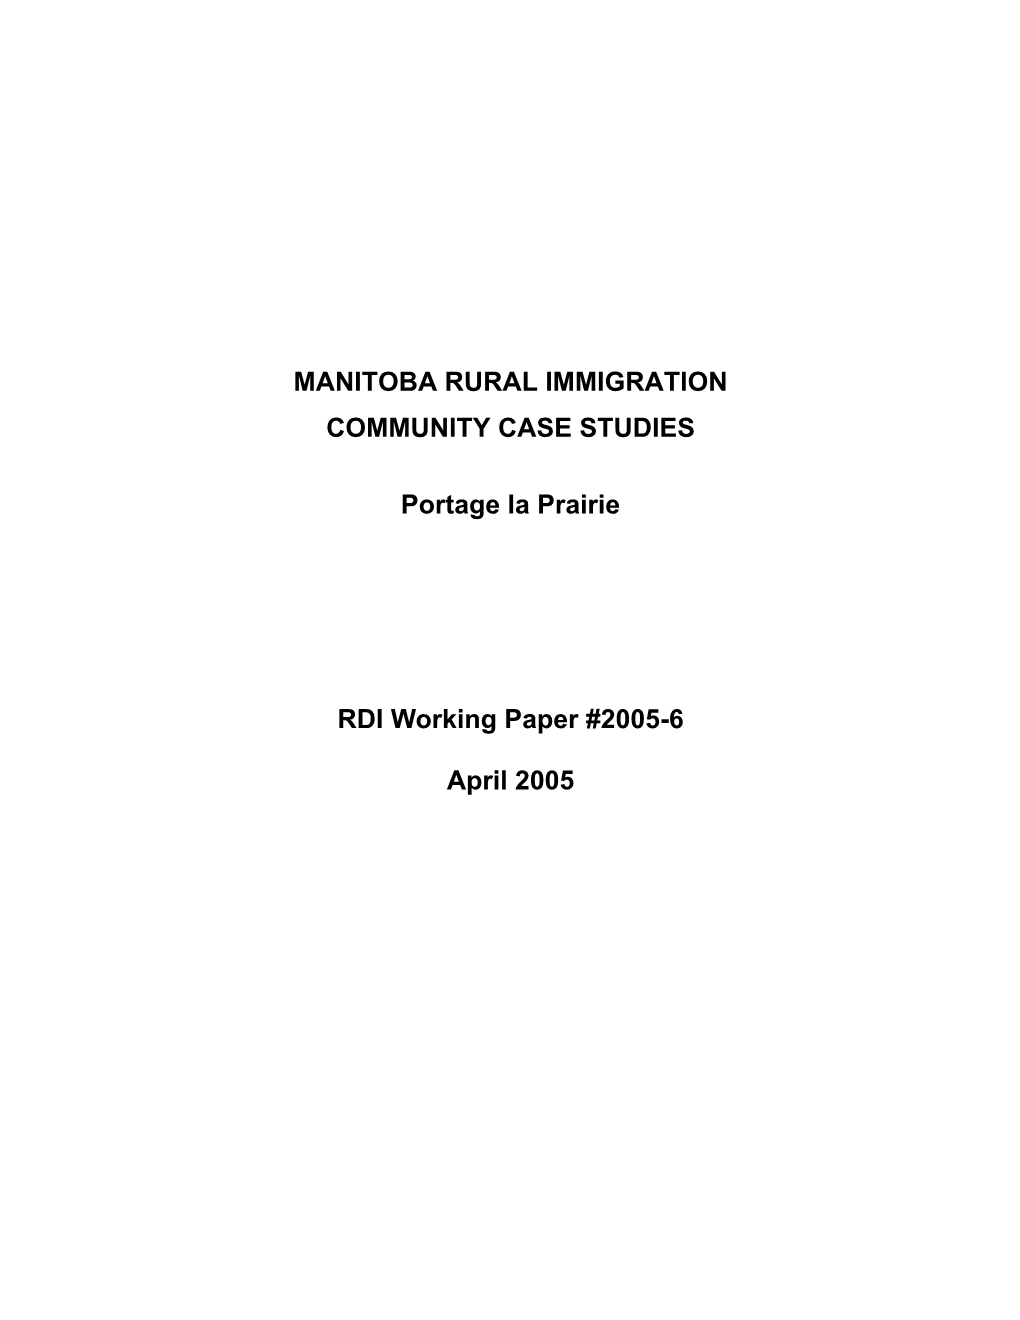 Portage La Prairie. RDI Working Paper 2005-6